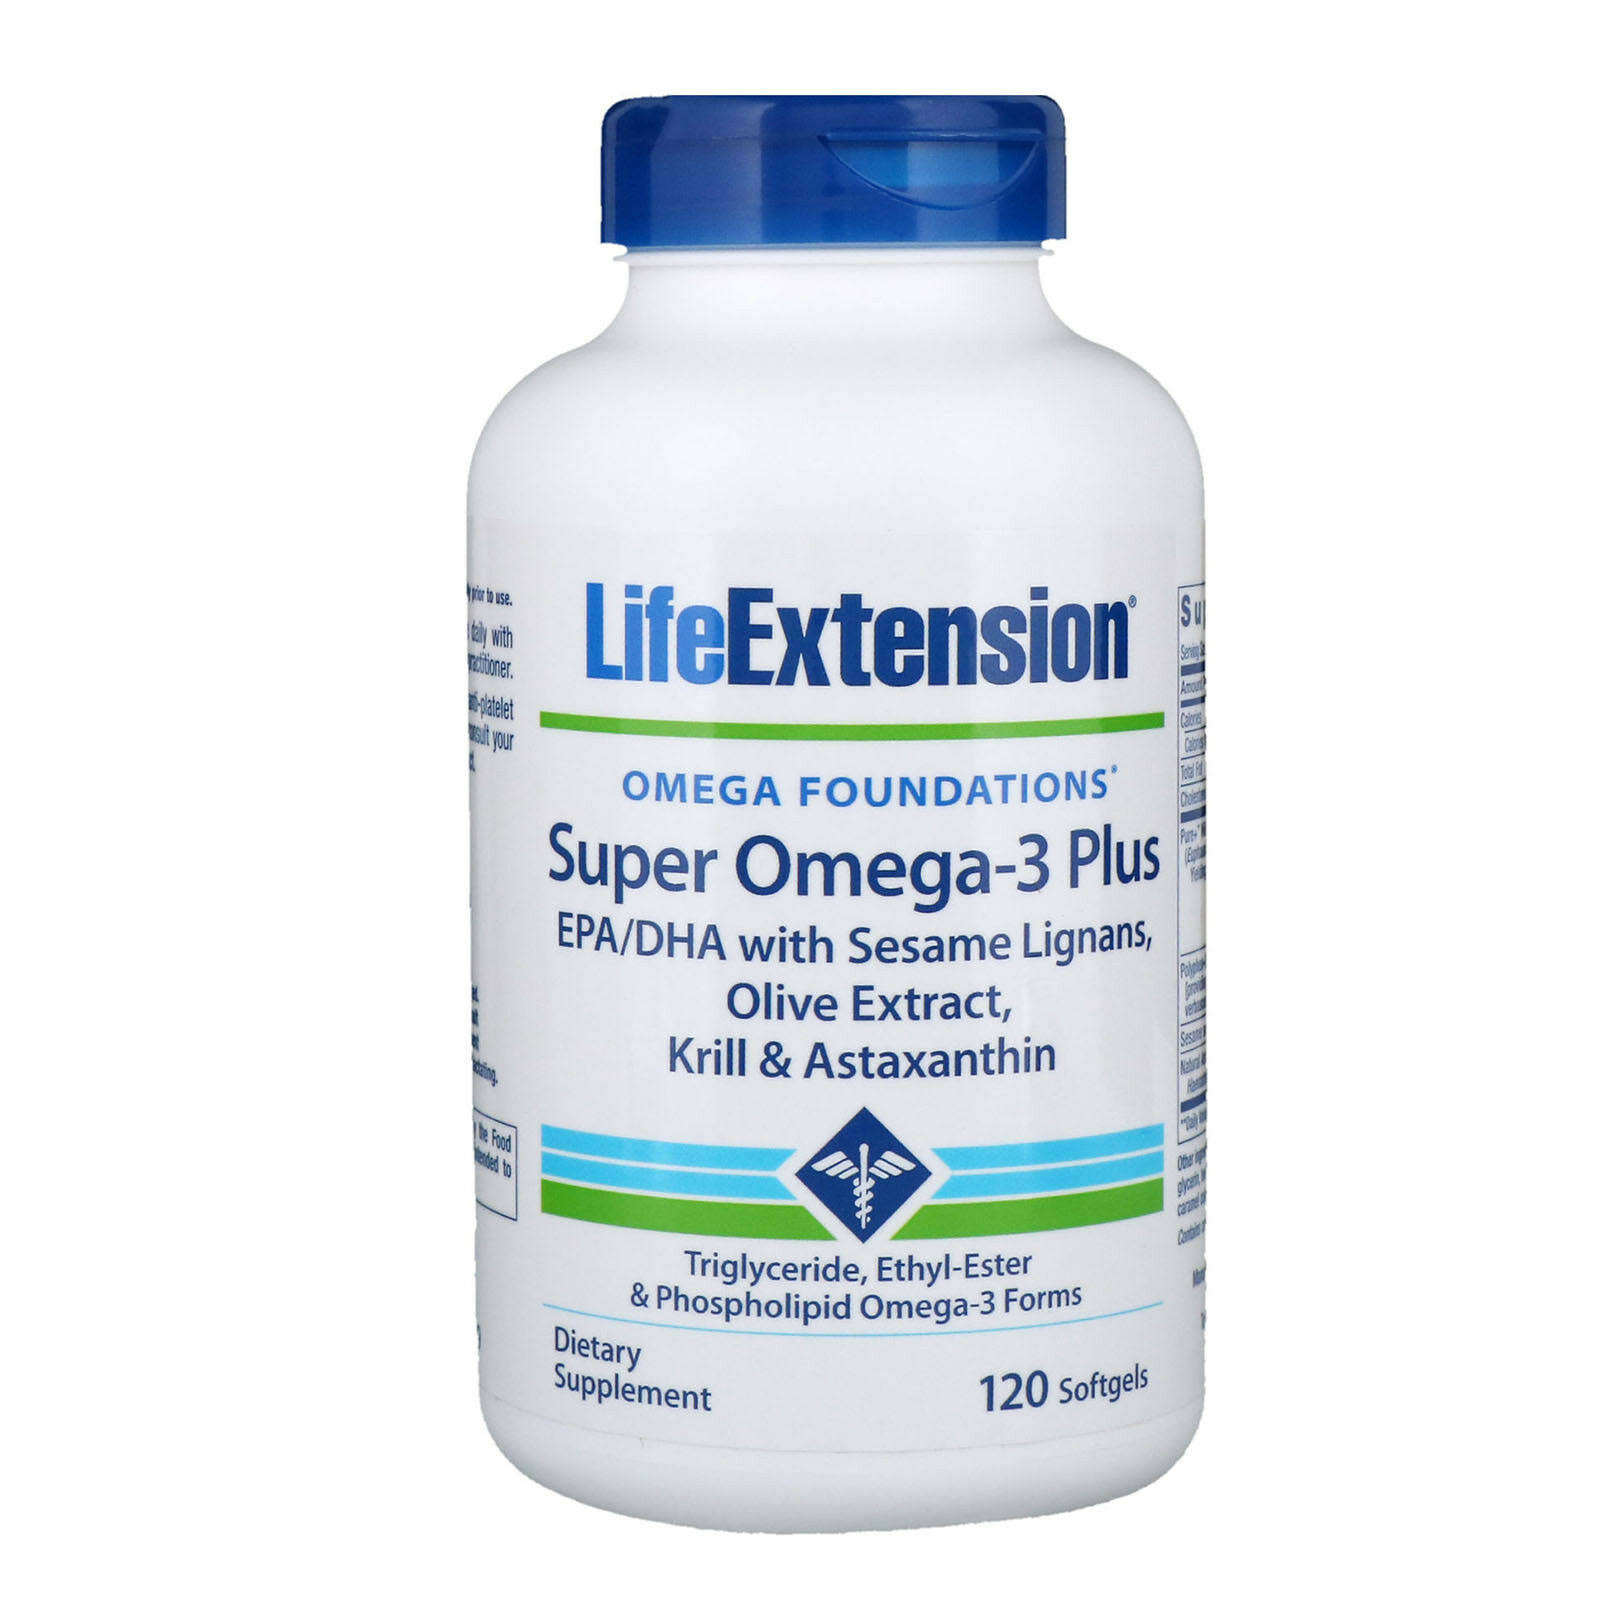 Life Extension Omega Foundations Super Omega-3 Plus Supplement - 120 Softgels